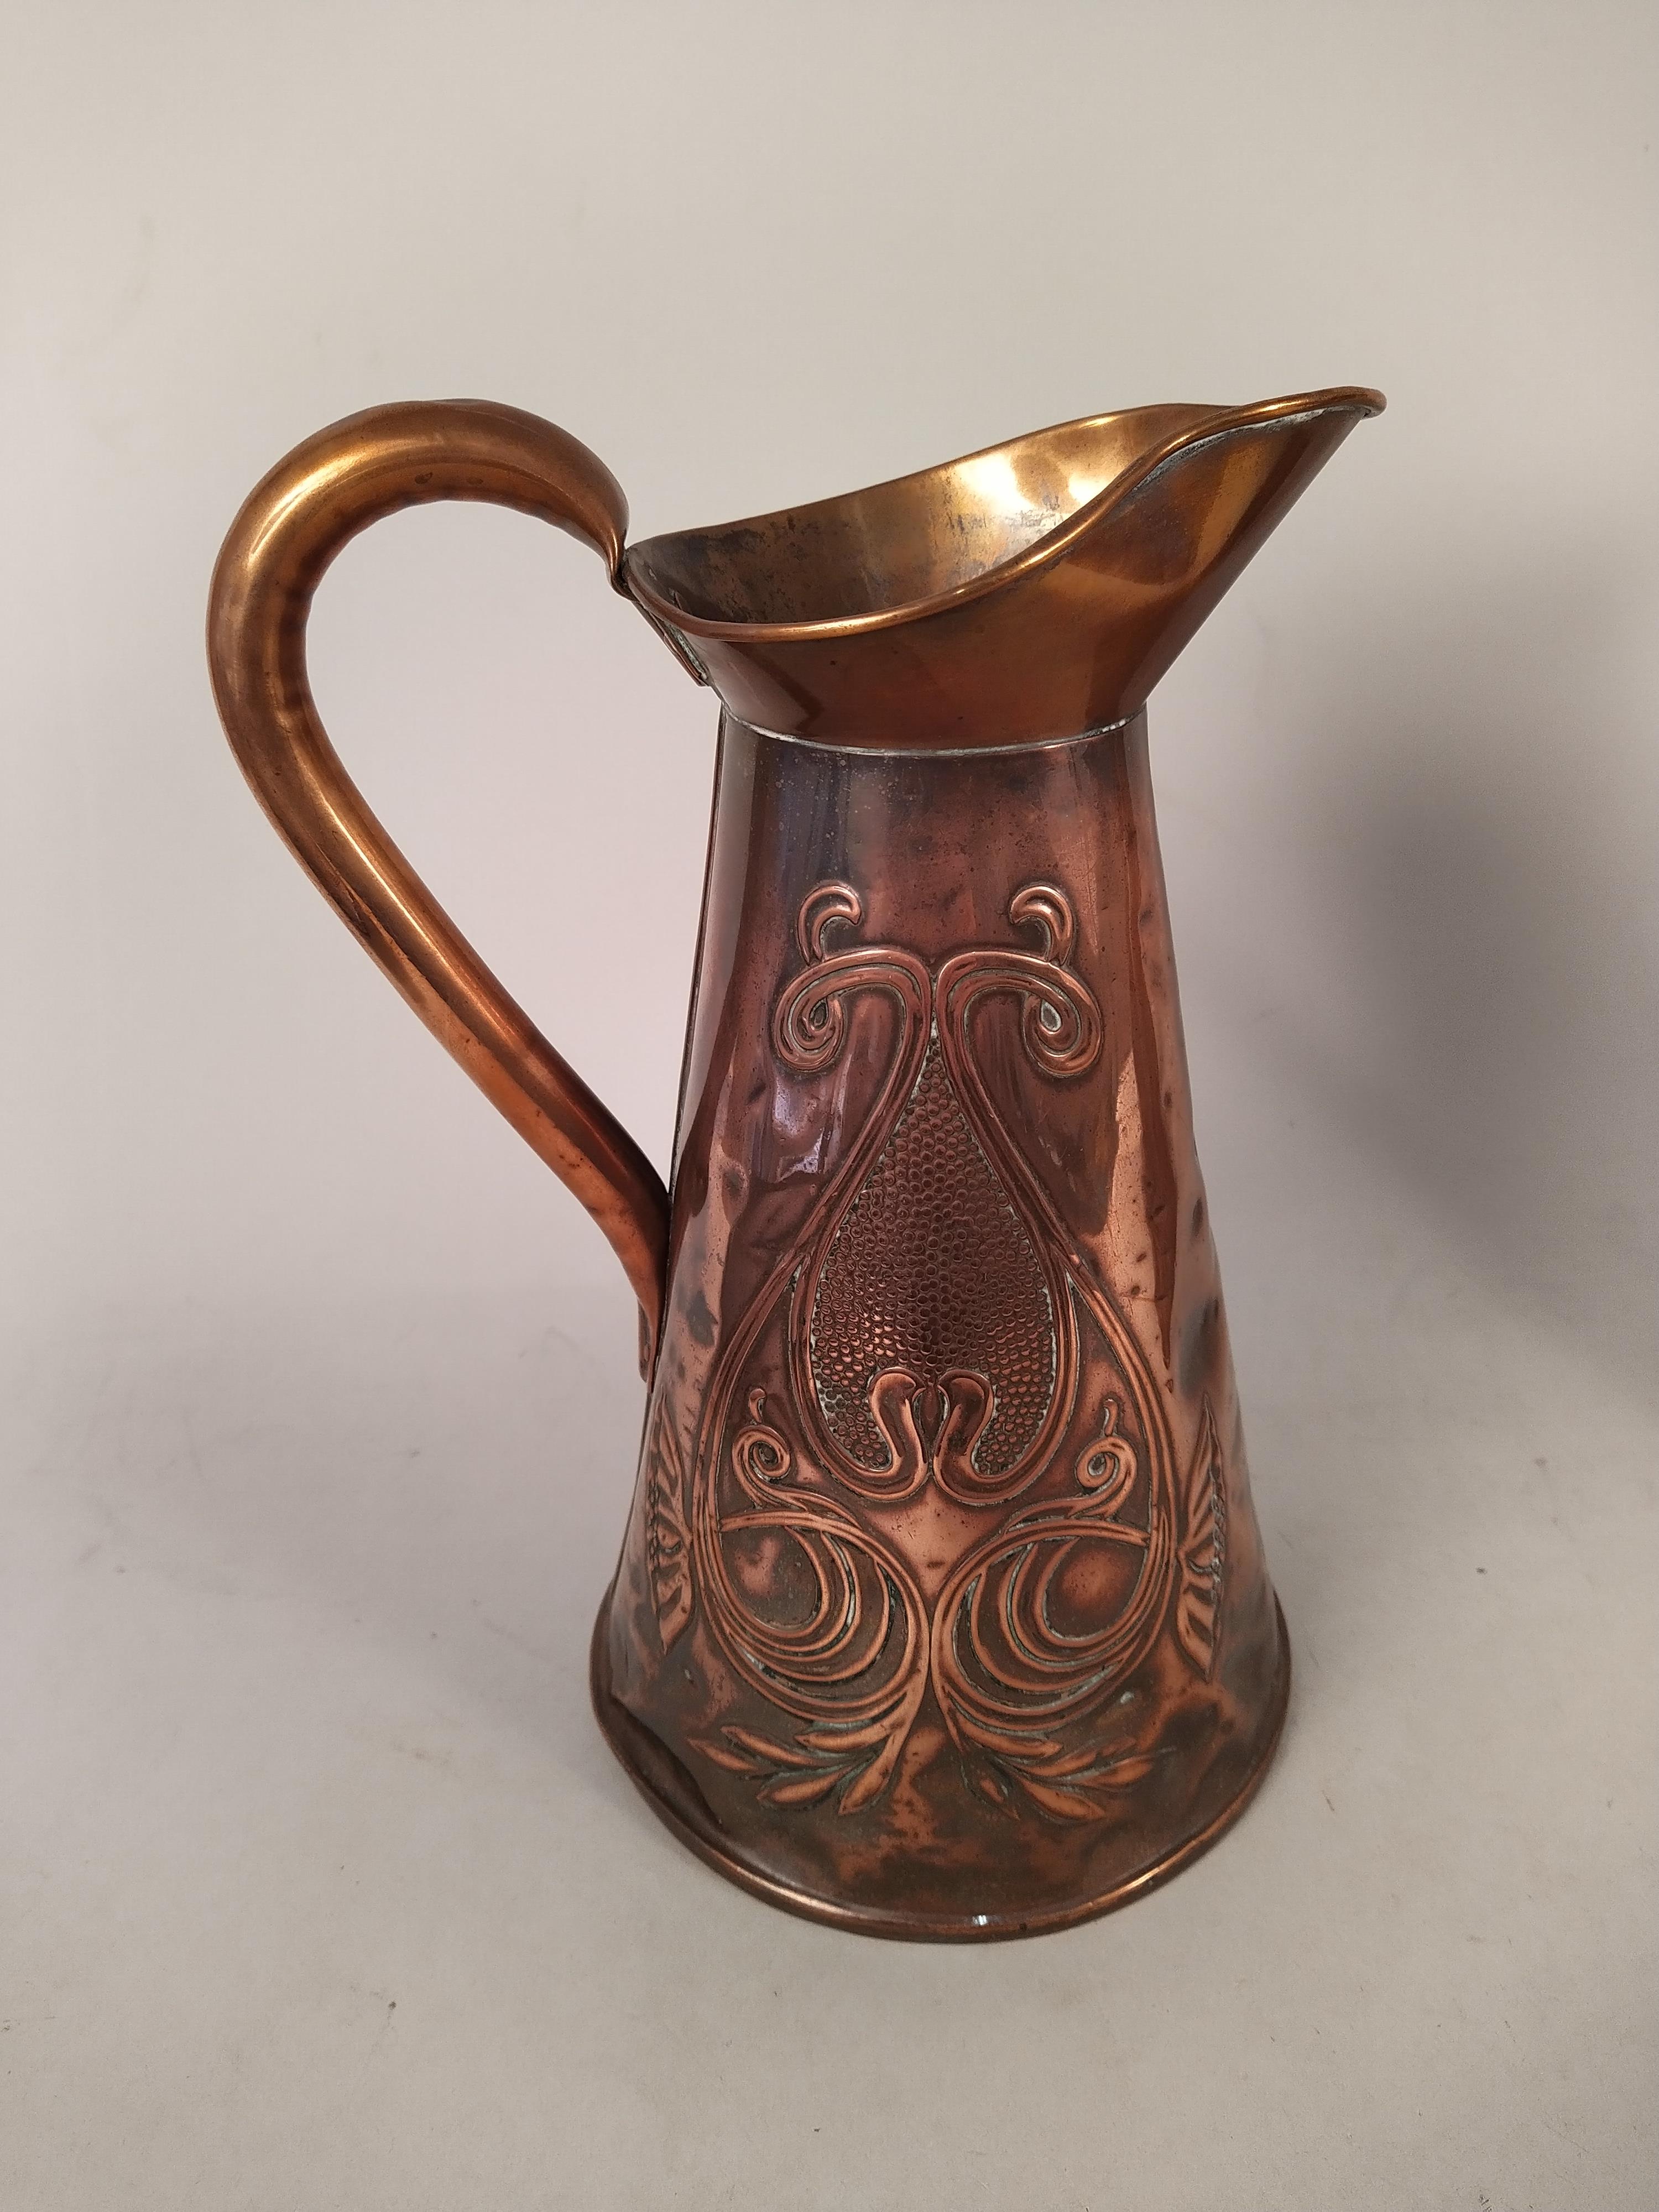 Three decorative Art Nouveau period copper jugs, the tallest marked JS&S (Joseph Sankey & Sons), - Image 3 of 3